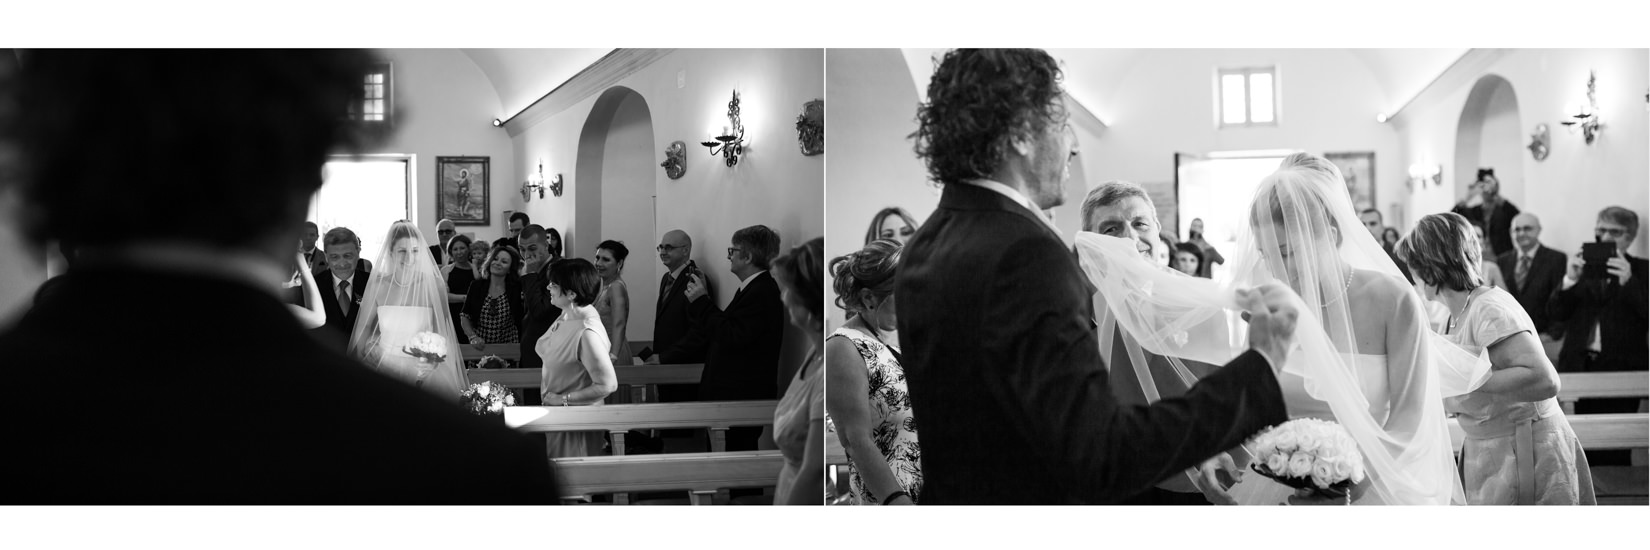 Wedding_Destination_Sicily-15